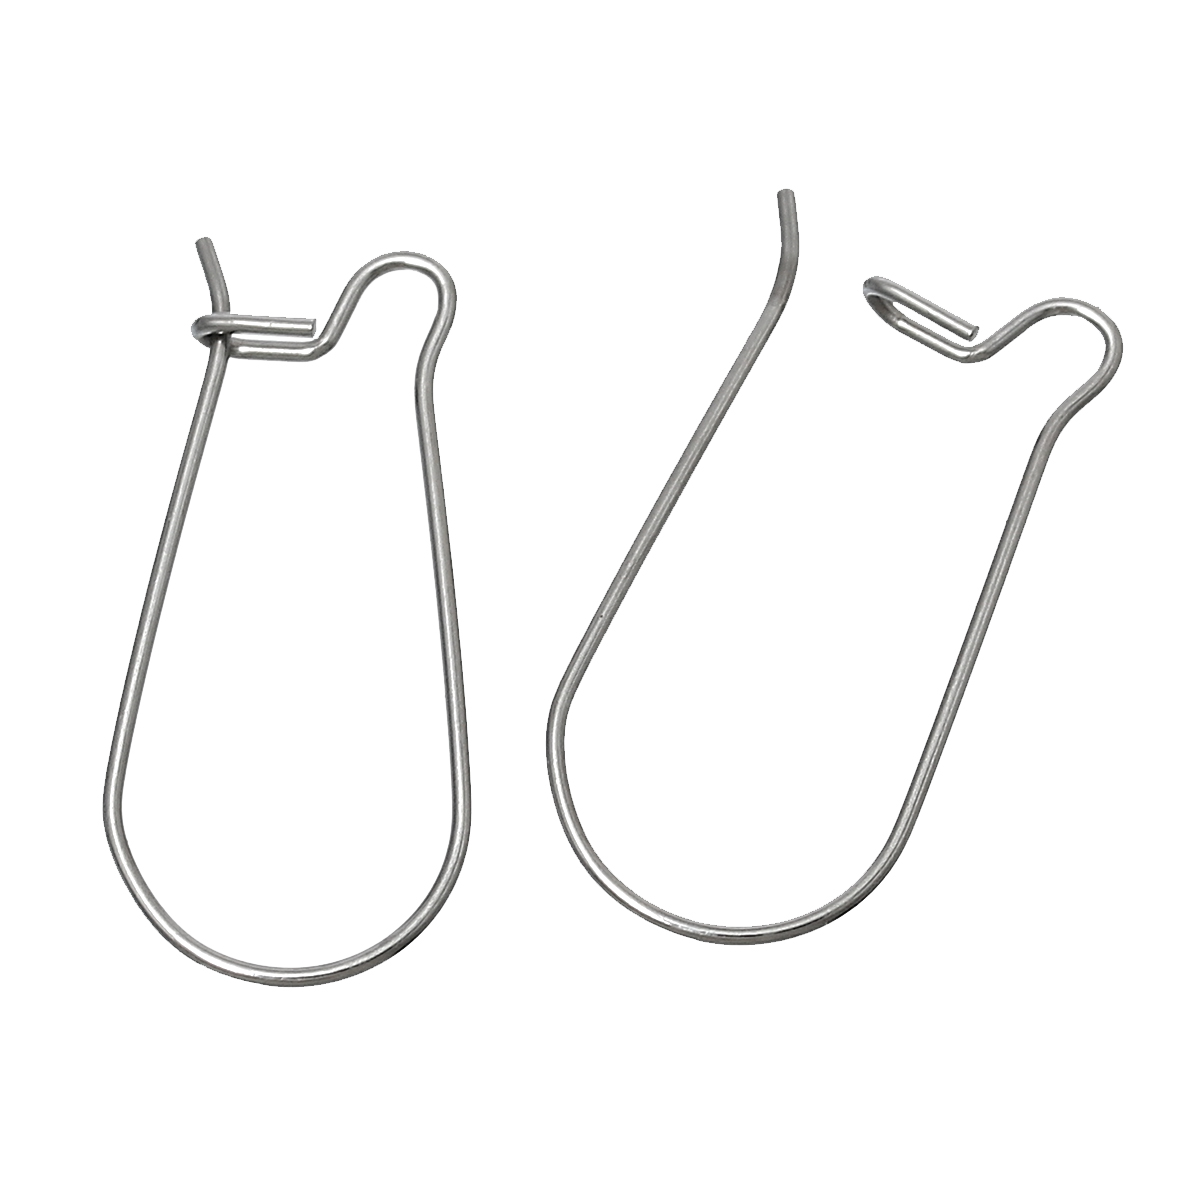 Picture of 304 Stainless Steel Kidney Ear Wire Hooks Earring Findings Silver Tone 25mm(1") x 12mm( 4/8"), Post/ Wire Size: (21 gauge), 50 PCs